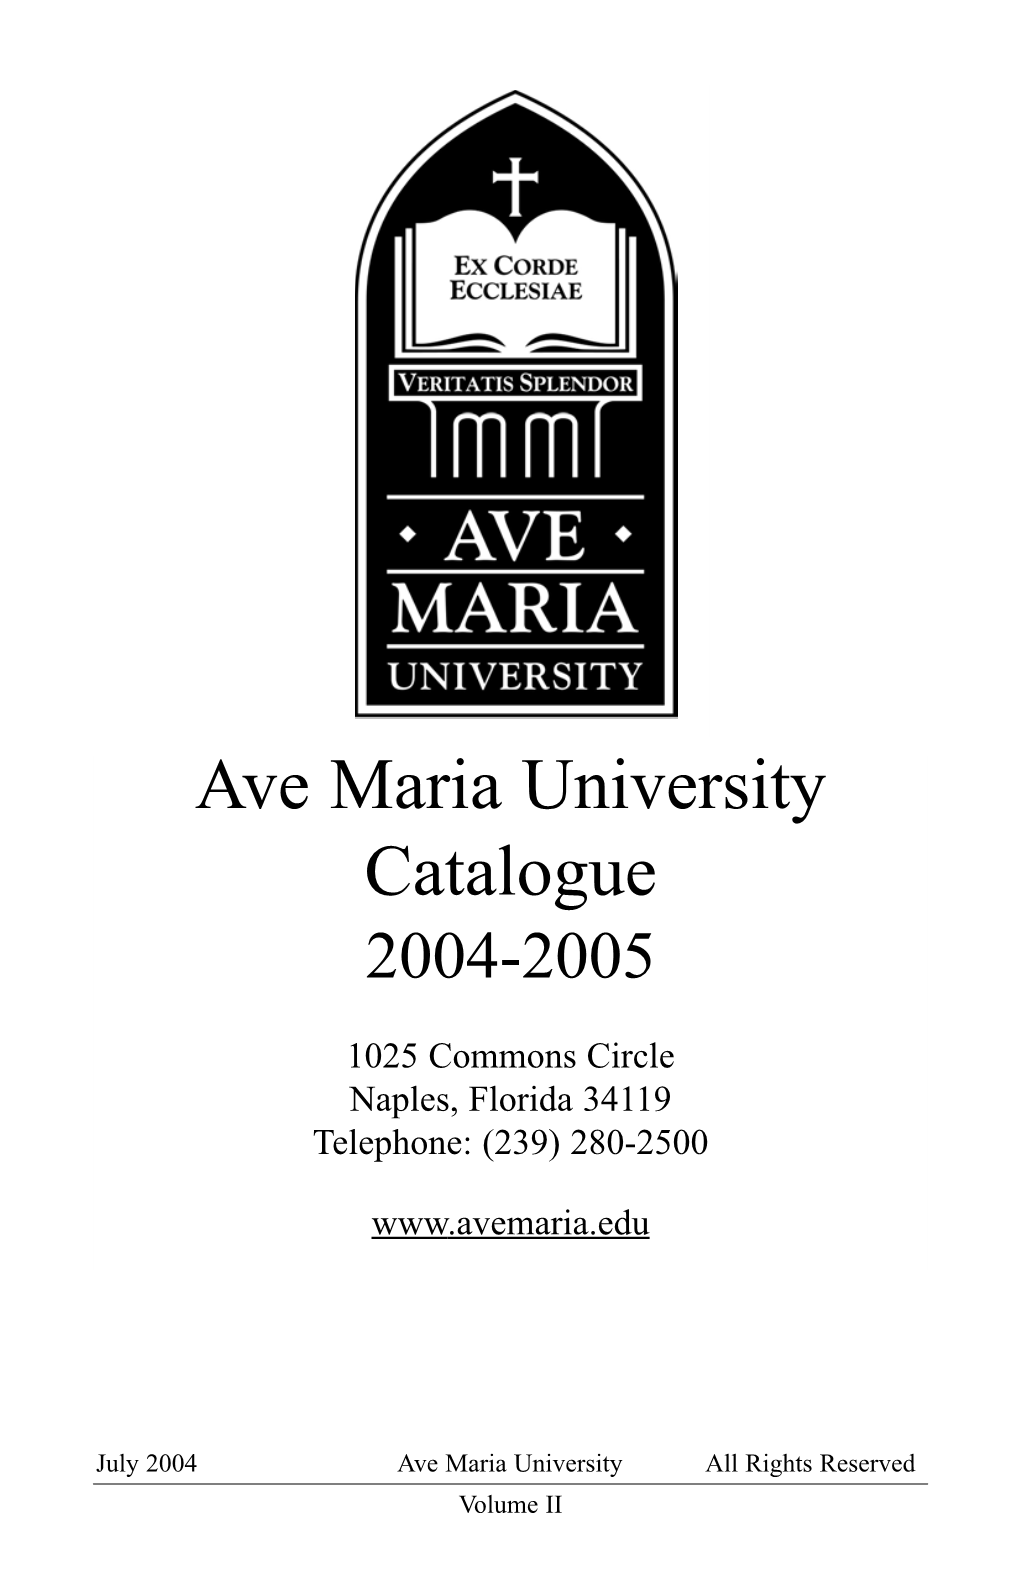 2004-2005 Academic Catalogue